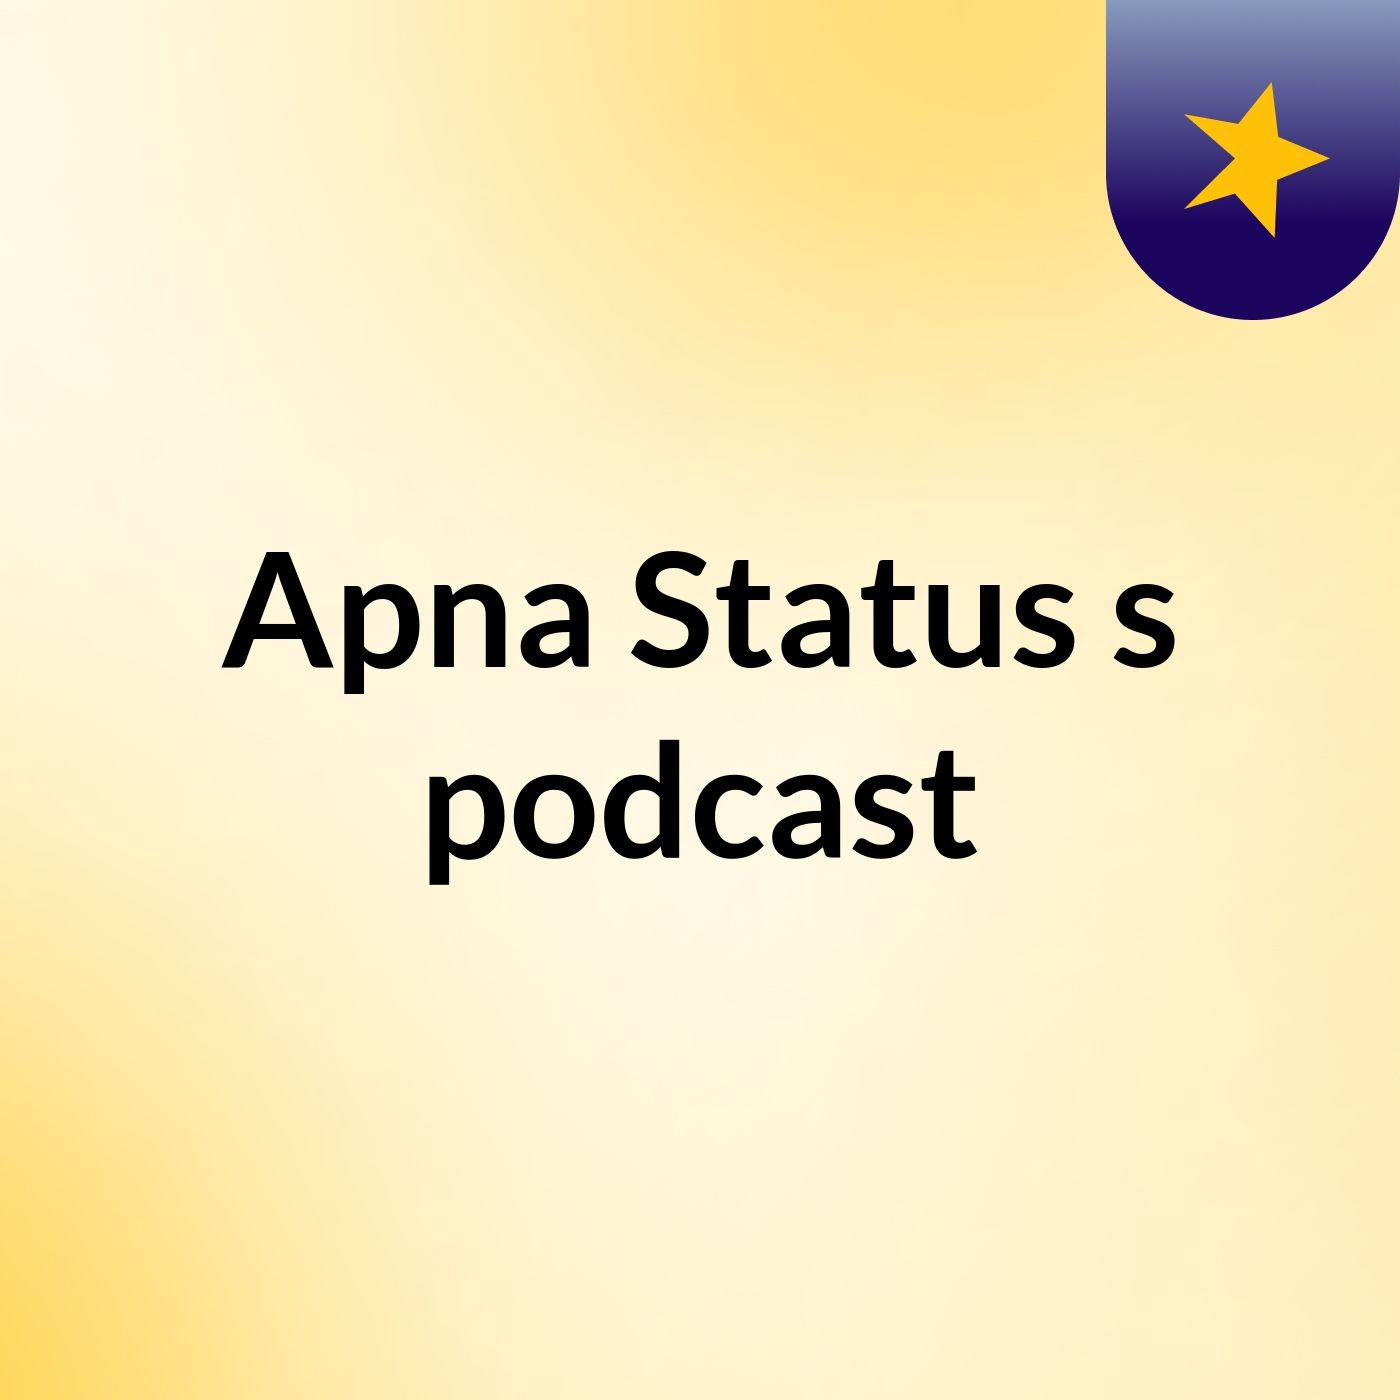 Episode 3 - Apna Status's podcast